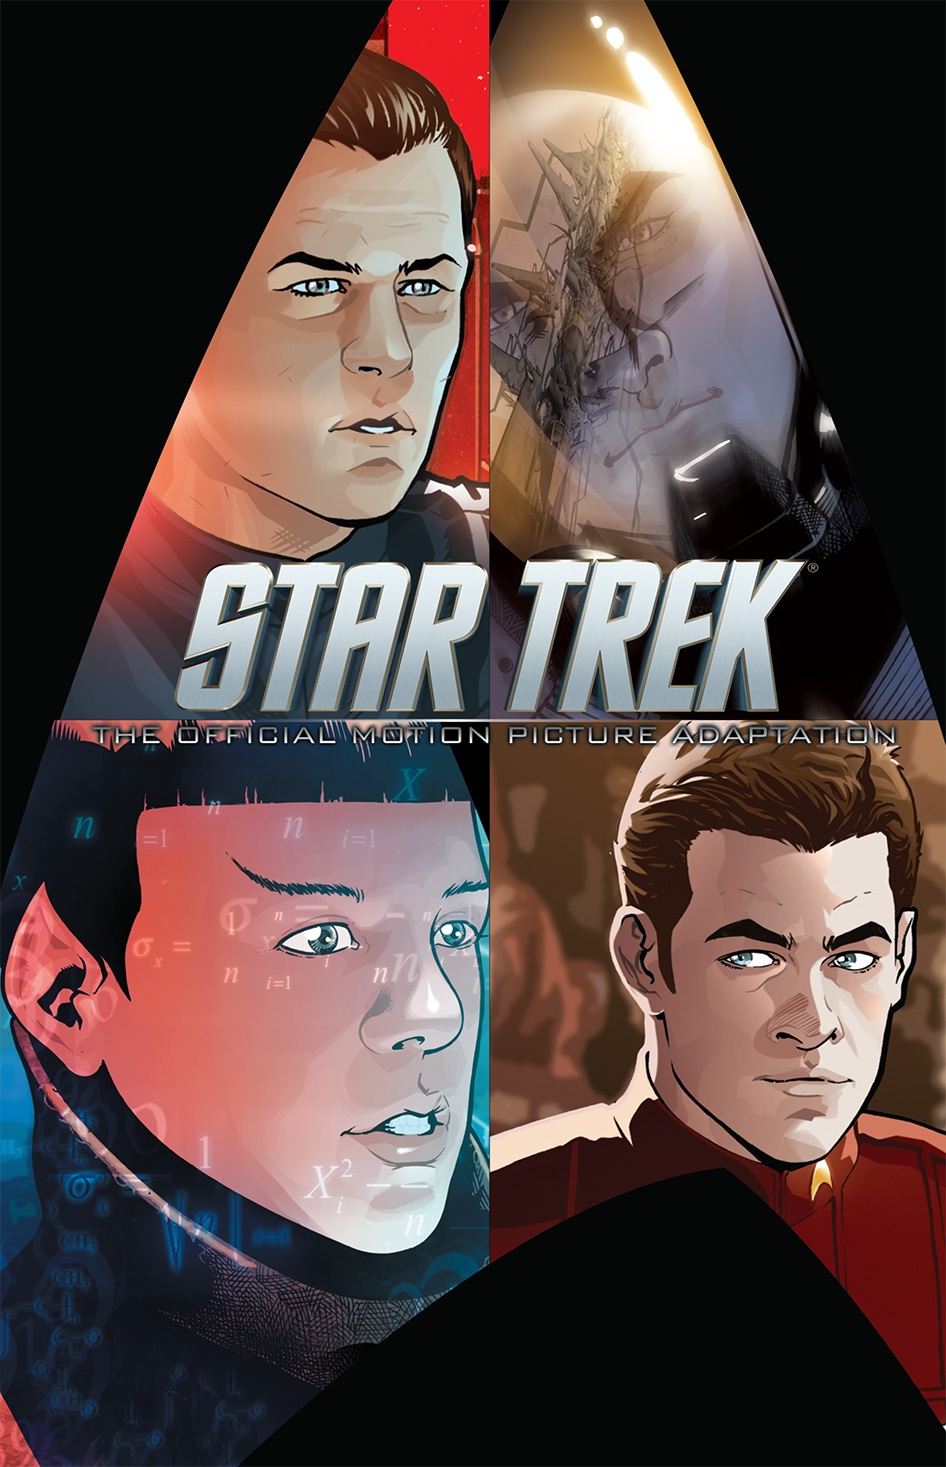 Star Trek 2230.06-2258.42 Released: Oct 2010